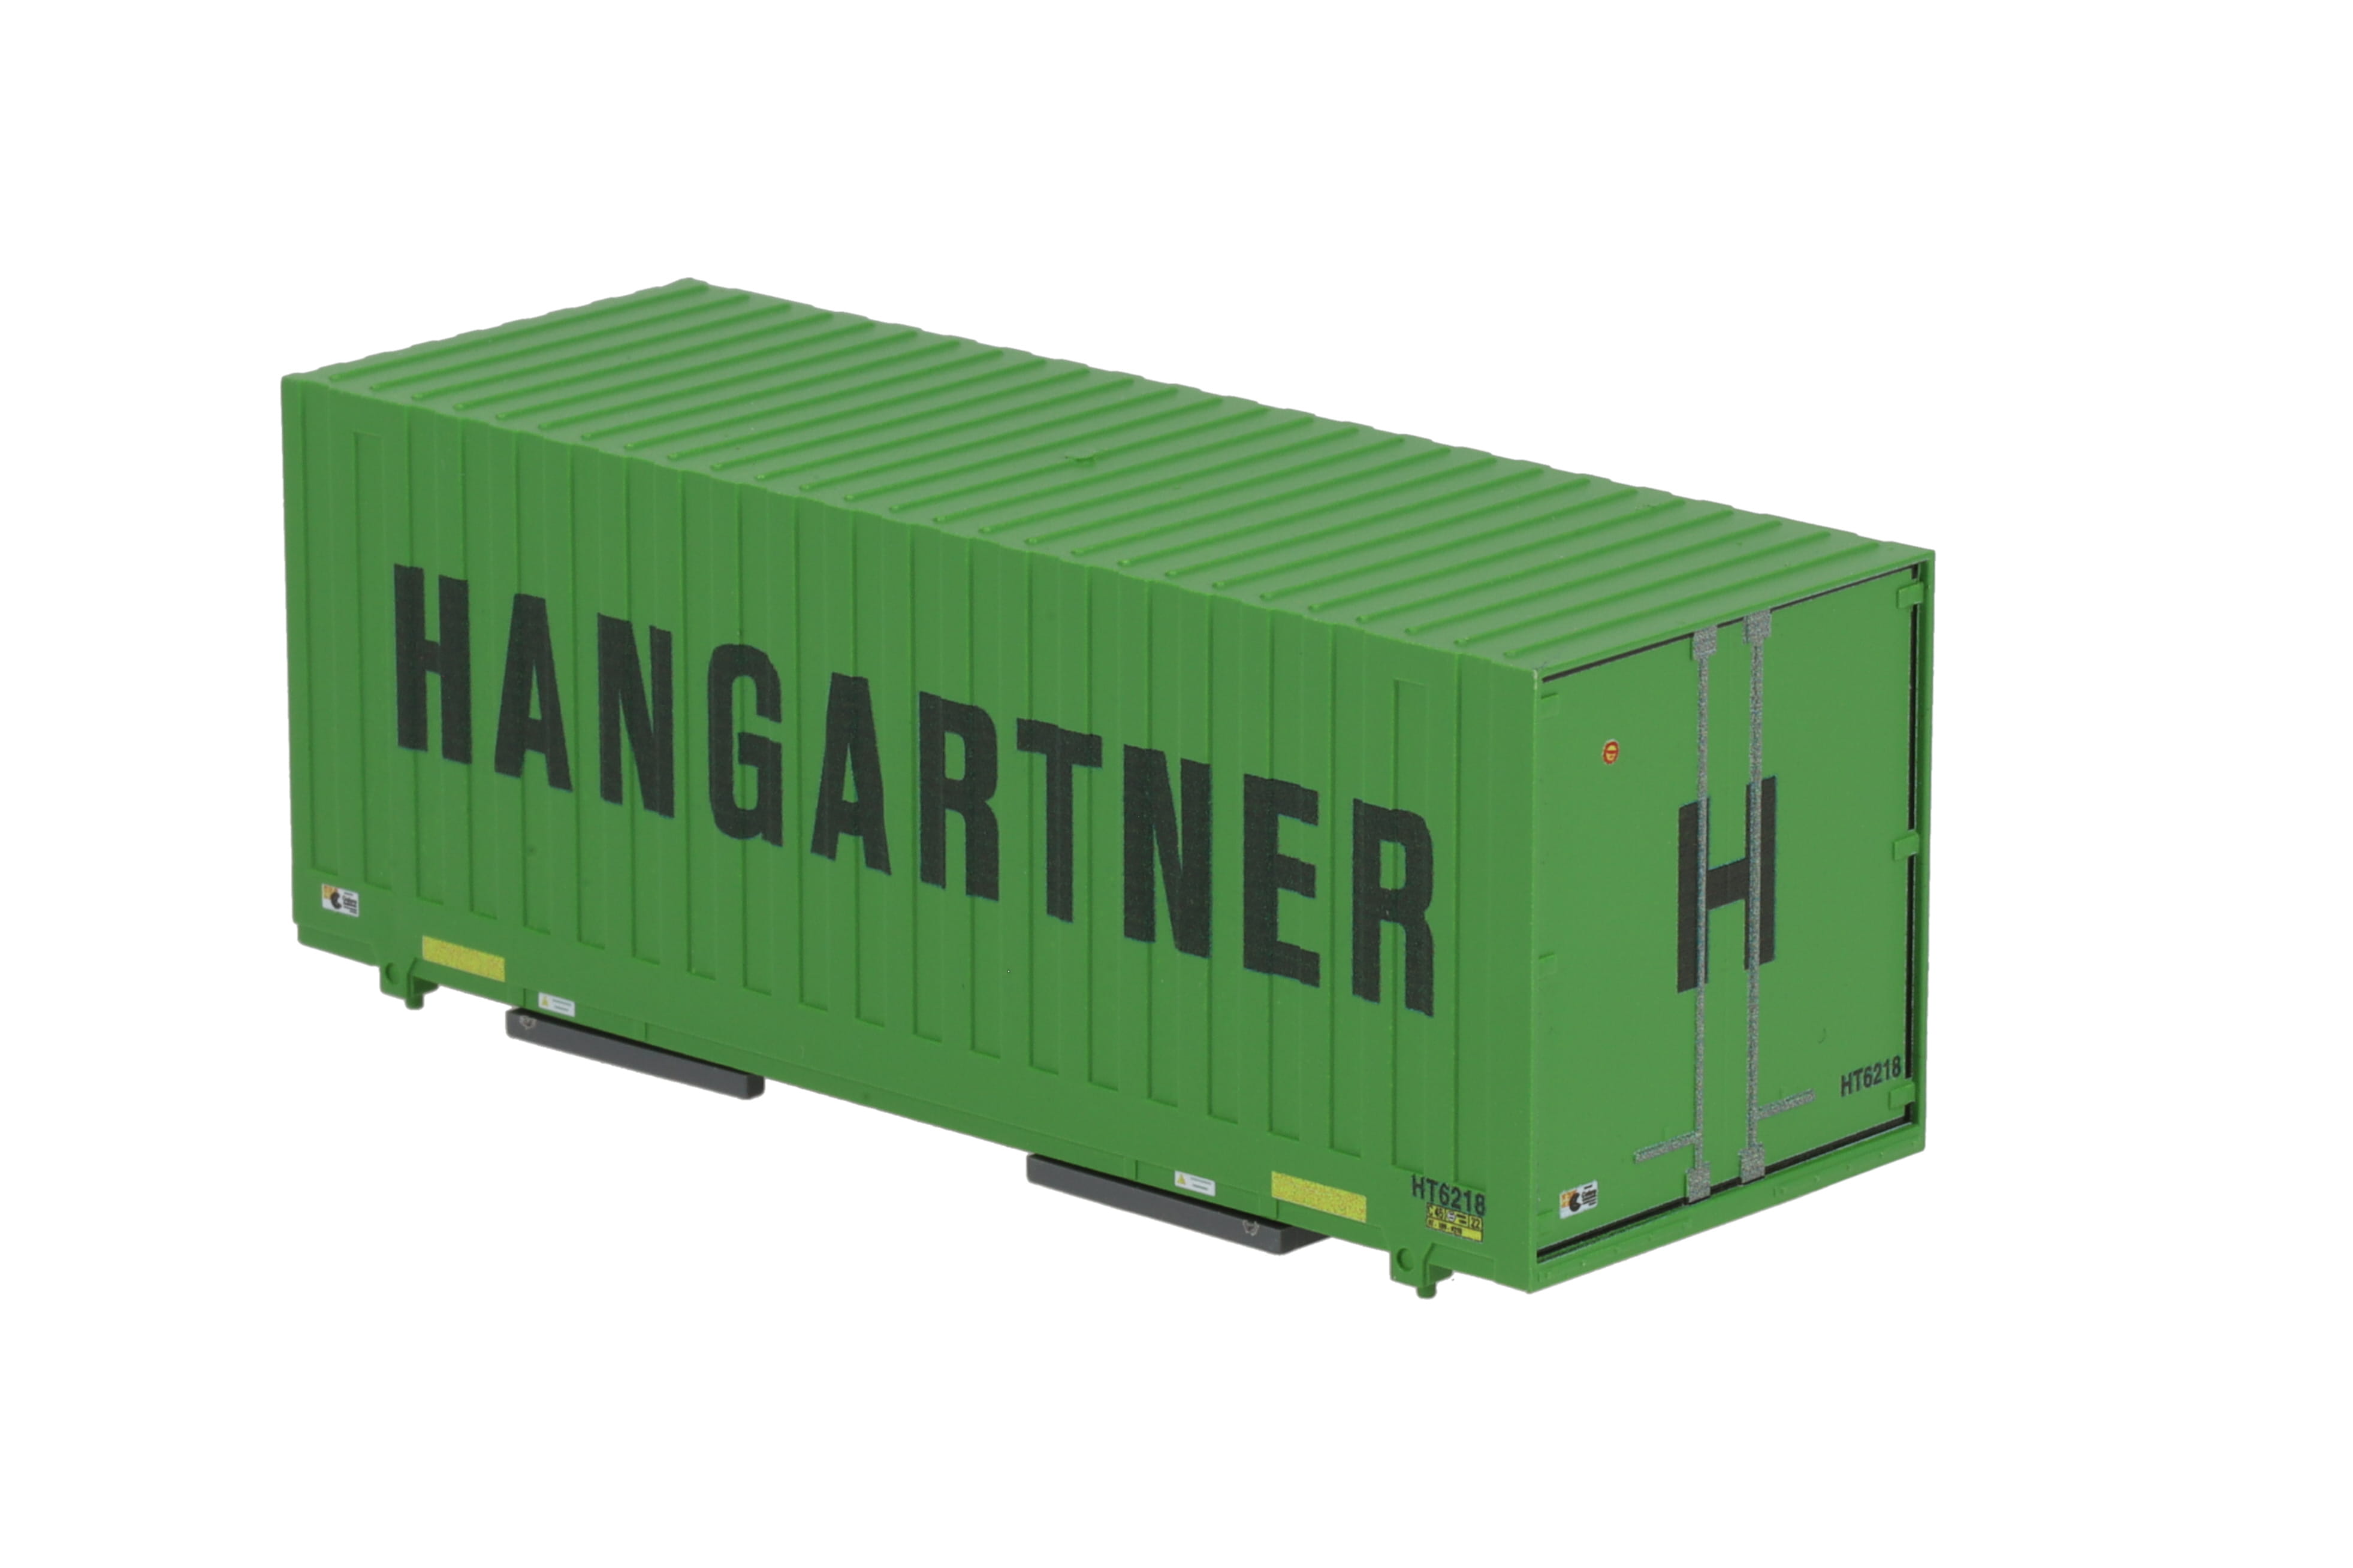 1:87 Container WB-C715 HANGAR Wechselbehälter WB-C 715 Cobra Spu-Wa Box, Aufschrift: HANGARTNER, Behälter-Nr: HT 6218